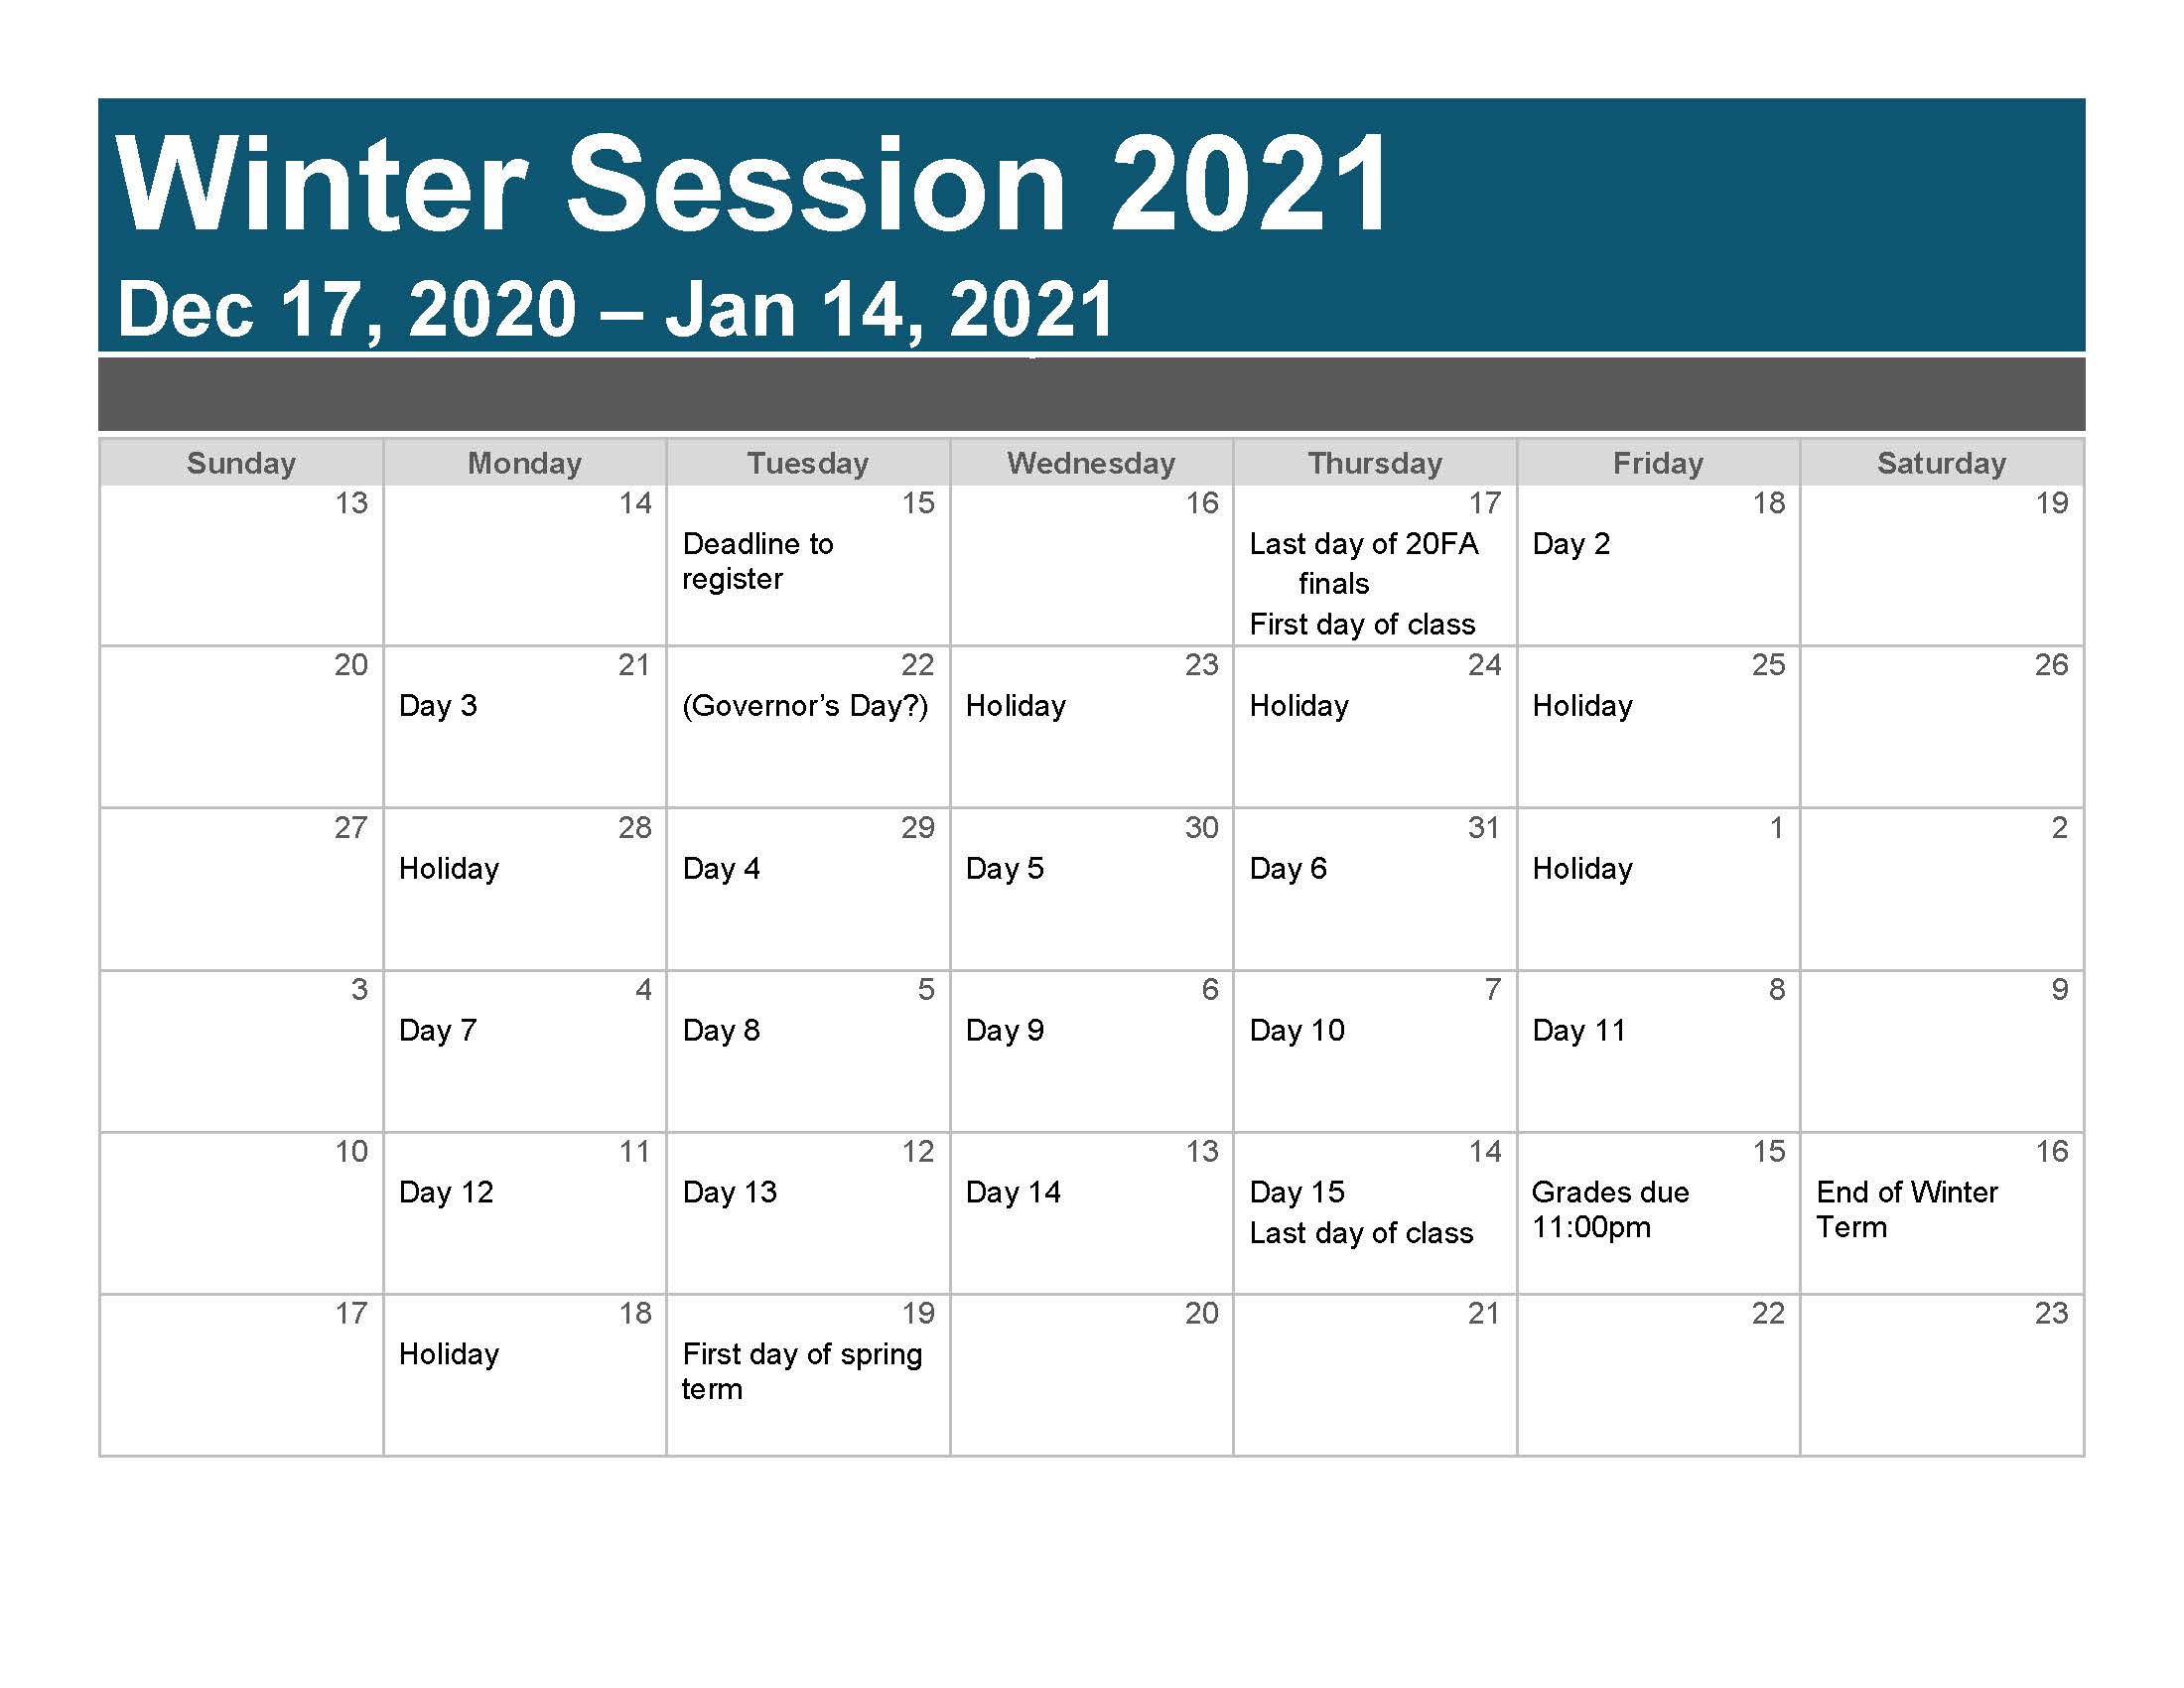 Winter Session 2021, San Diego State University, SDSU Global Campus